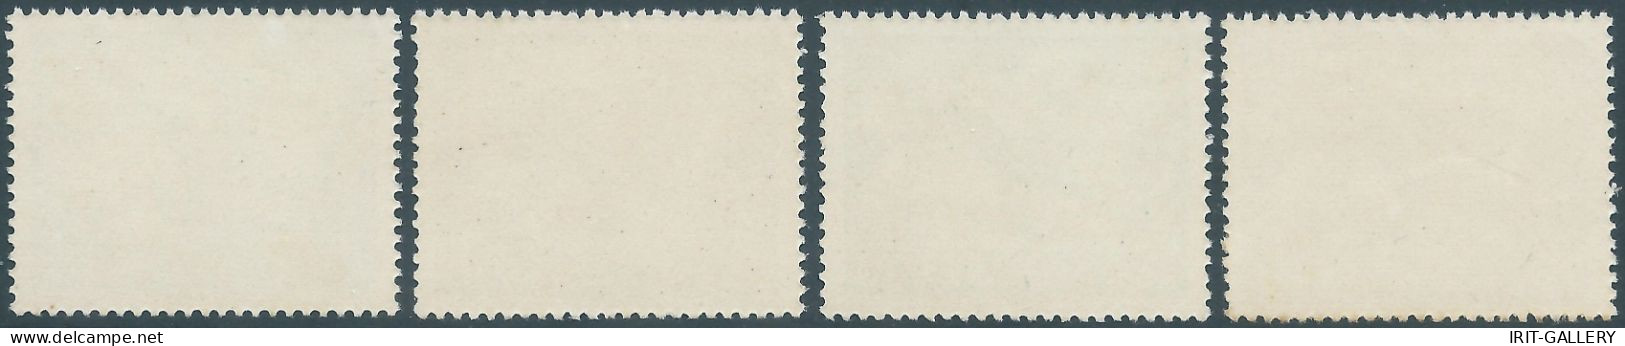 Portogallo - Portugal - 1954 Popular Education,complete Series,MNH - Unused Stamps